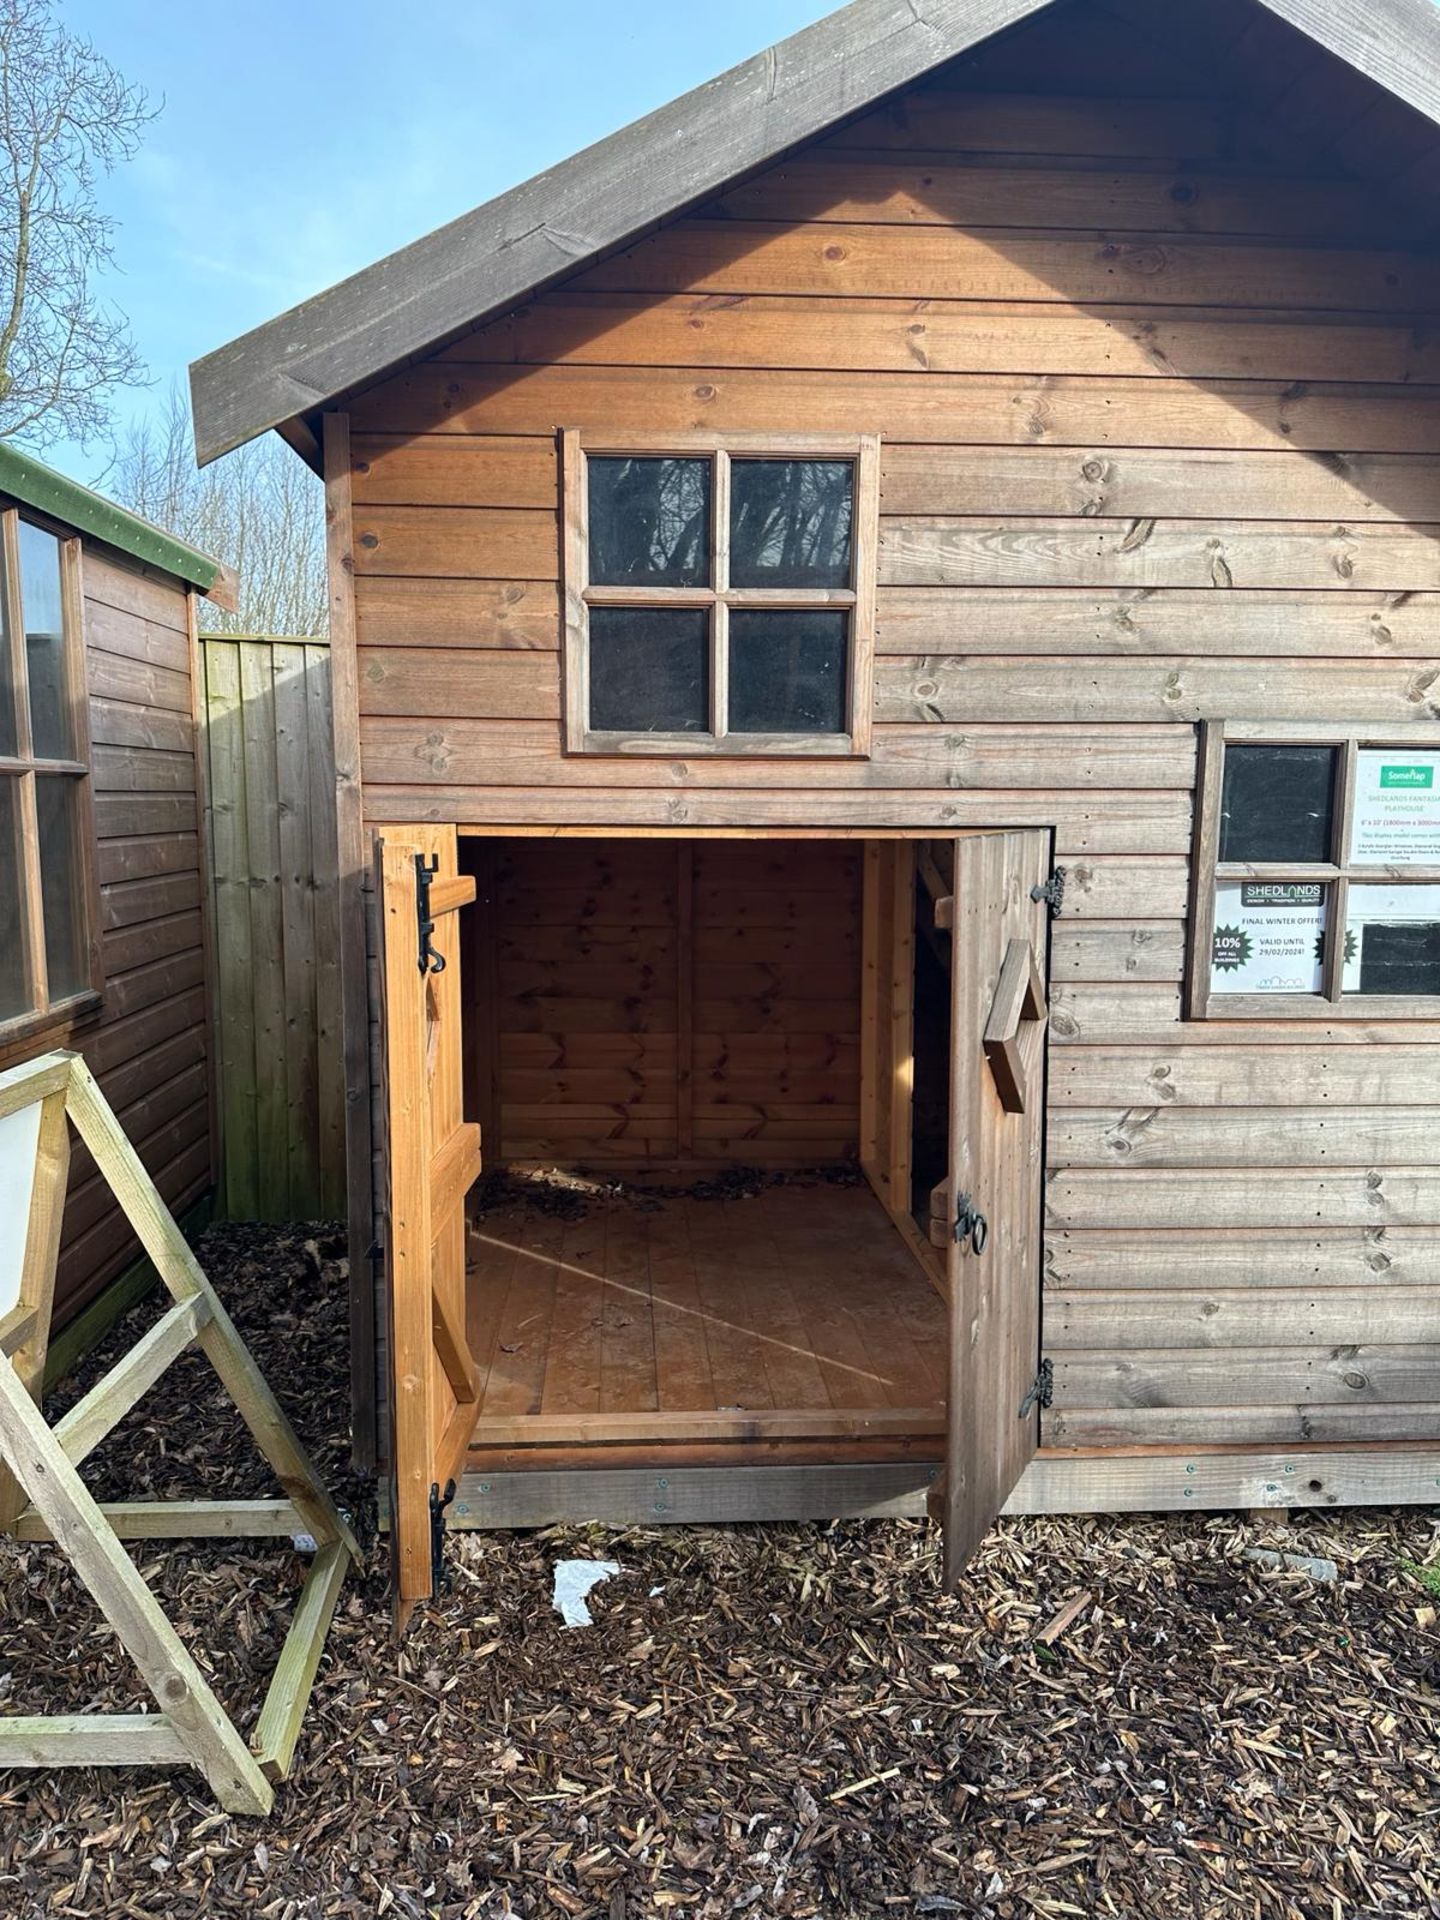 Ex-display 6x10 2-storey timber playhouse with garage, Standard 16mm Nominal Cladding £1779